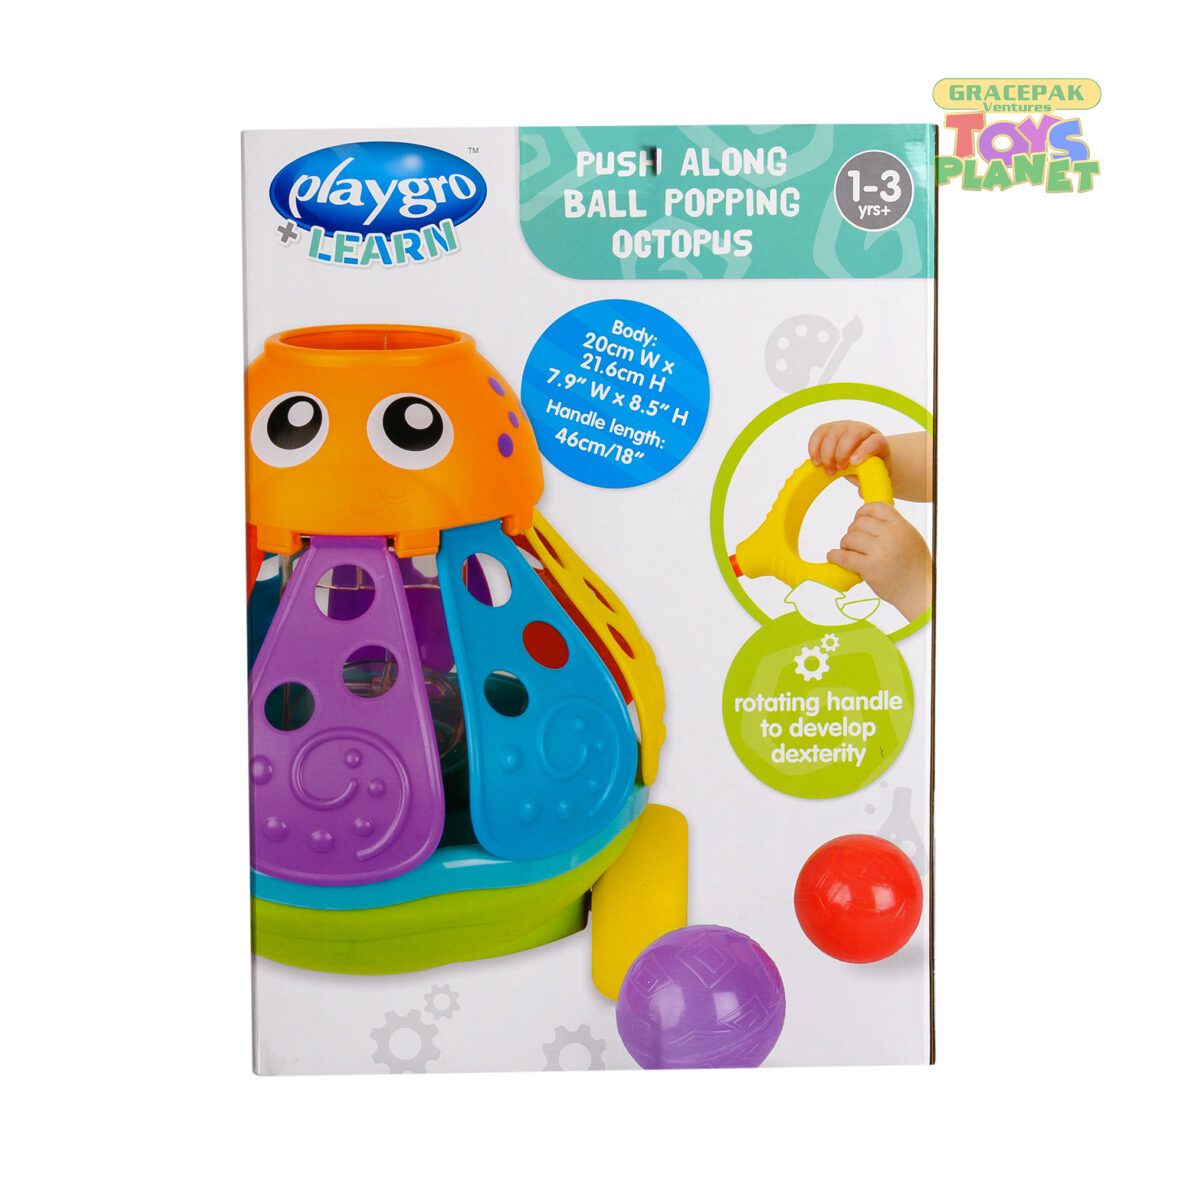 Playgro_Push Along Ball Popping Octopus_2